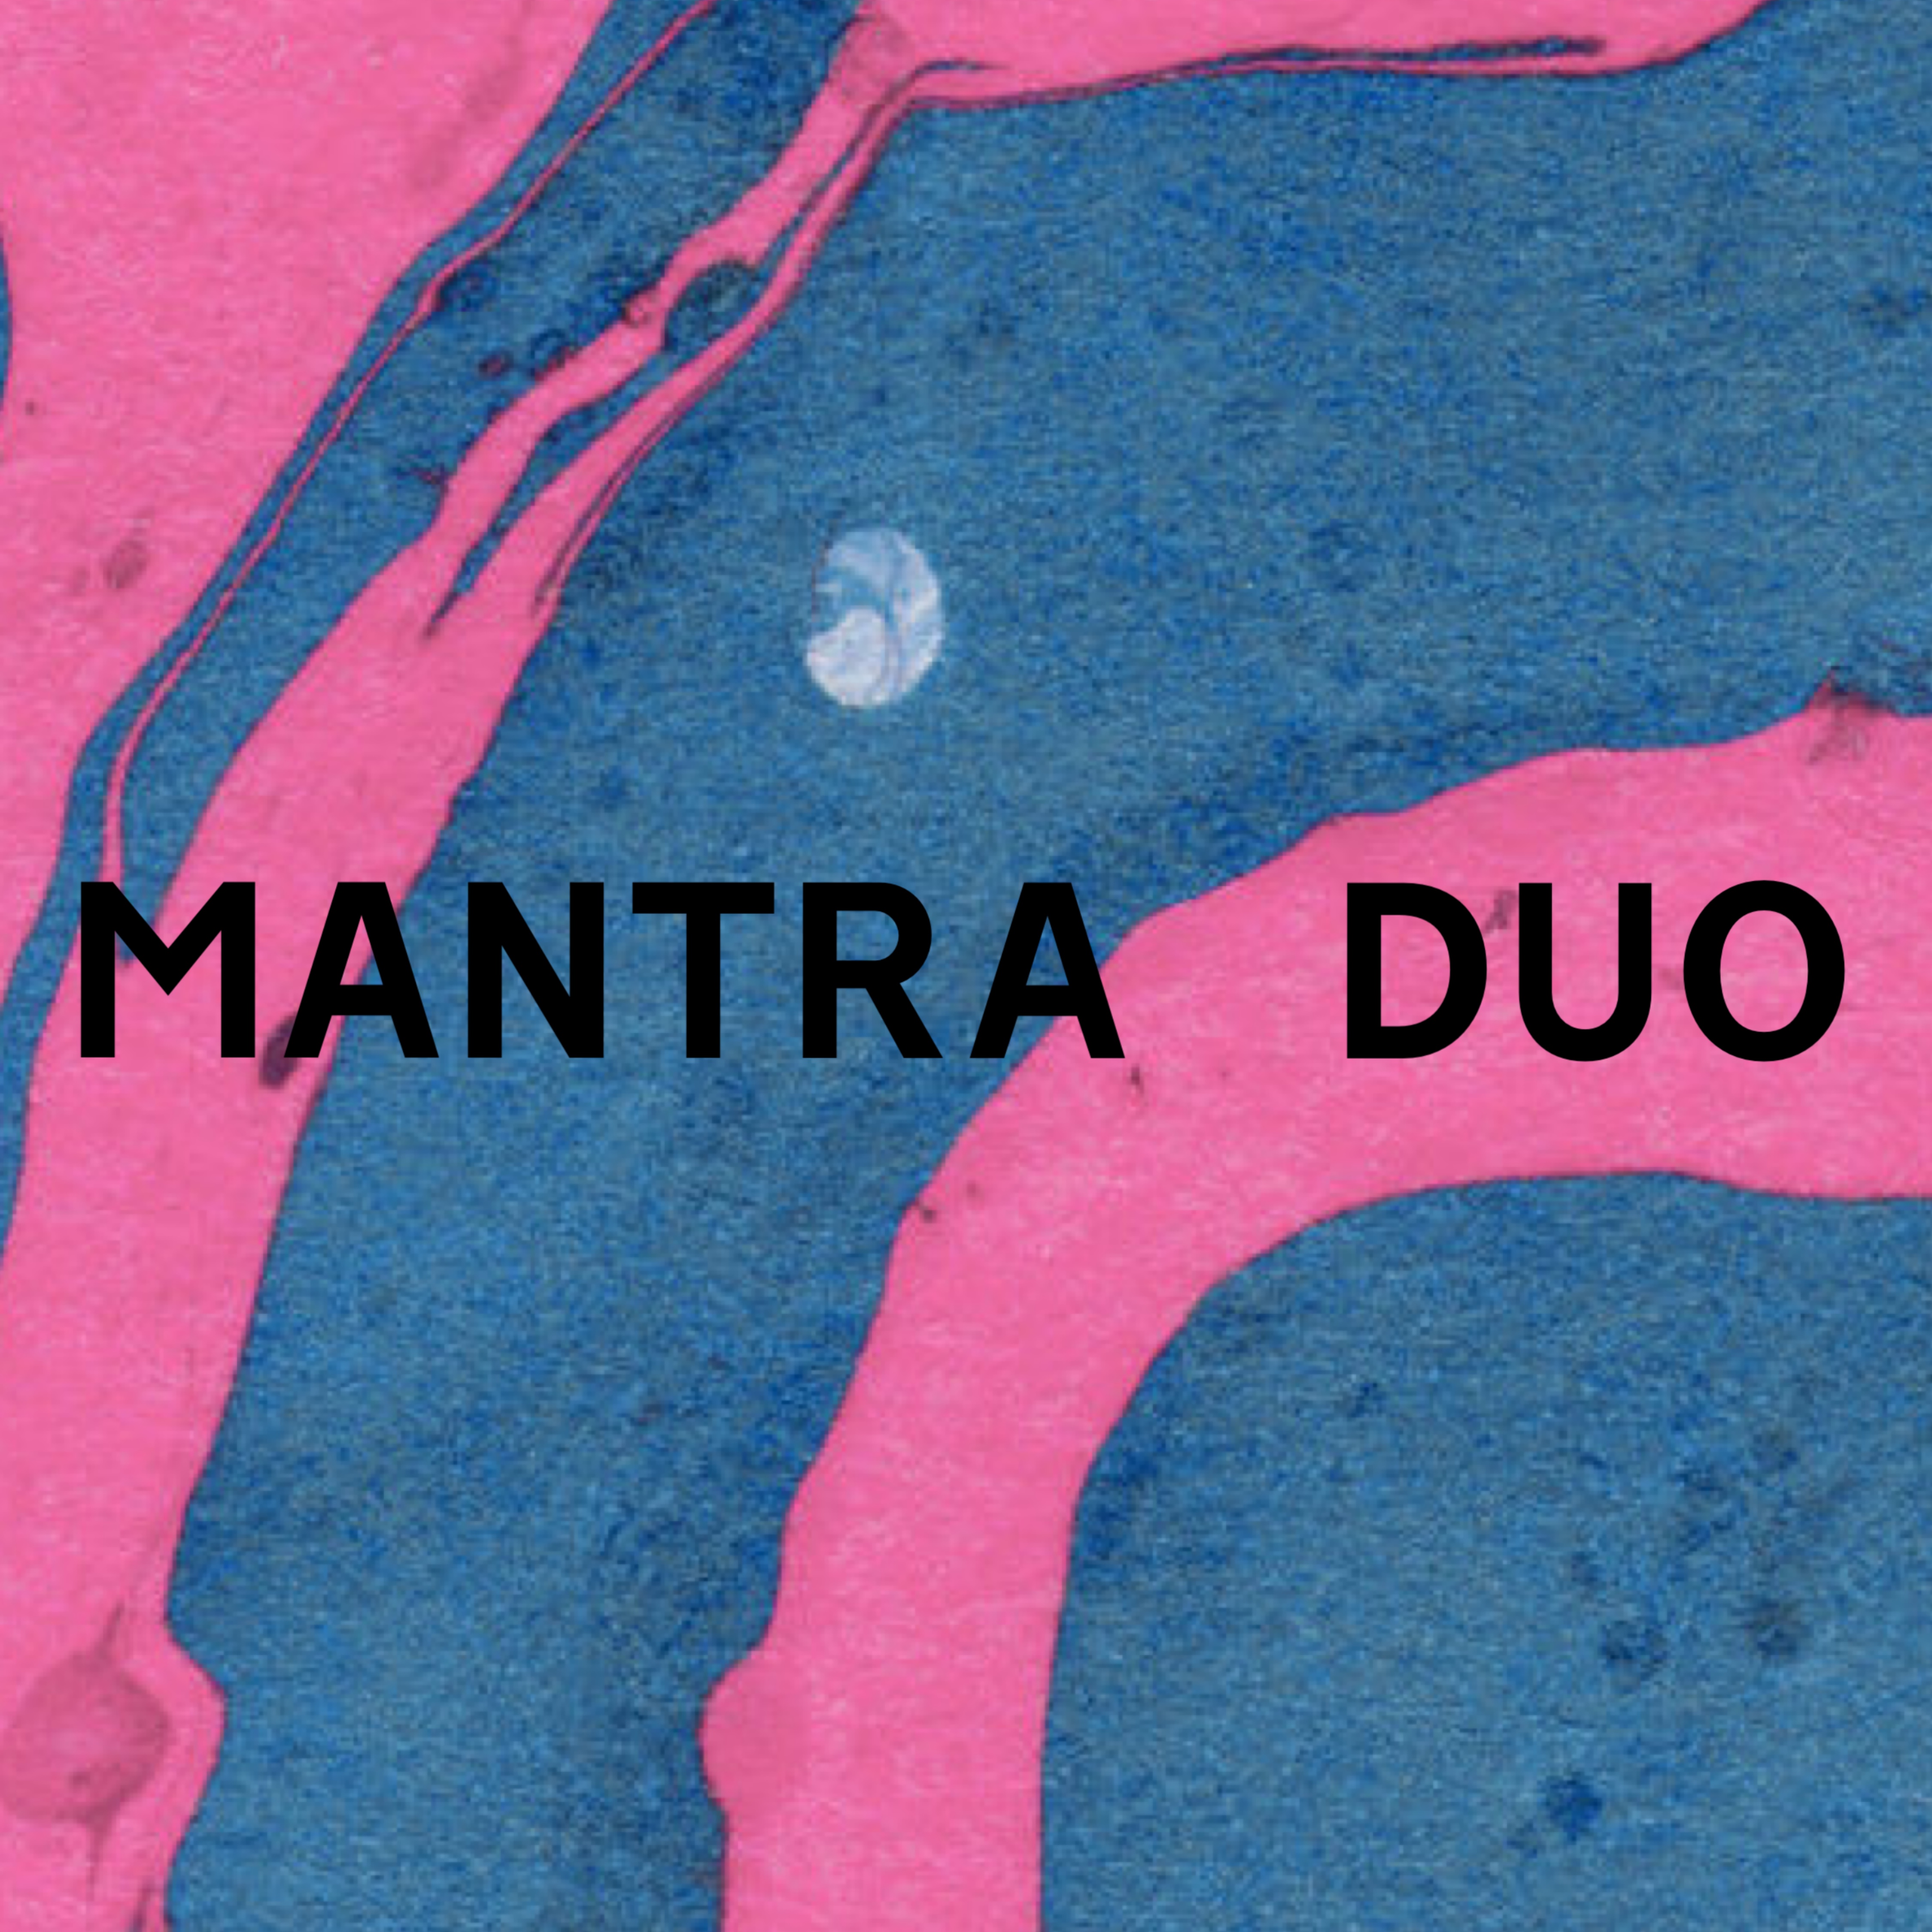 Mantra Duo